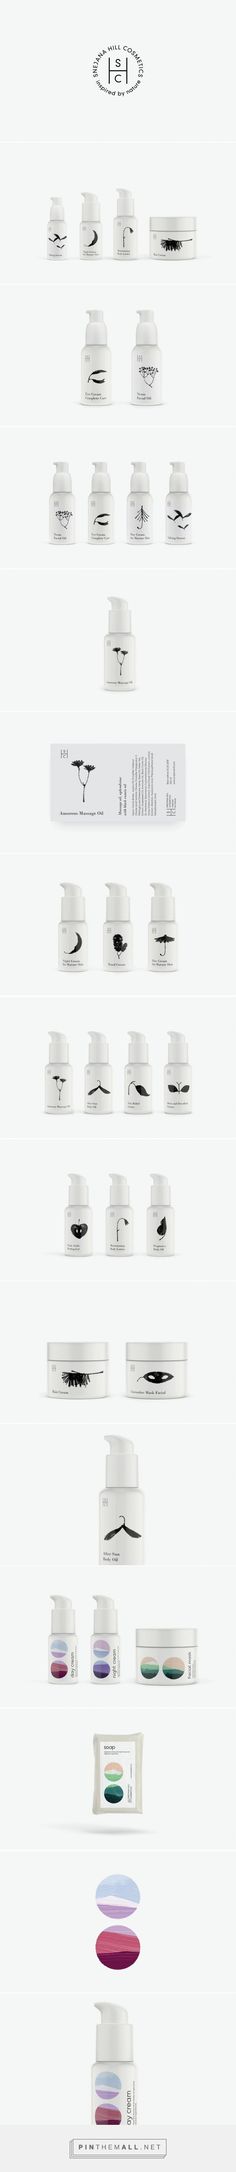 Snejana Hill Cosmetics packaging design by SUPREMATIKA - http://www.packagingoftheworld.com/2016/11/snejana-hill-cosmetics.html Label Design